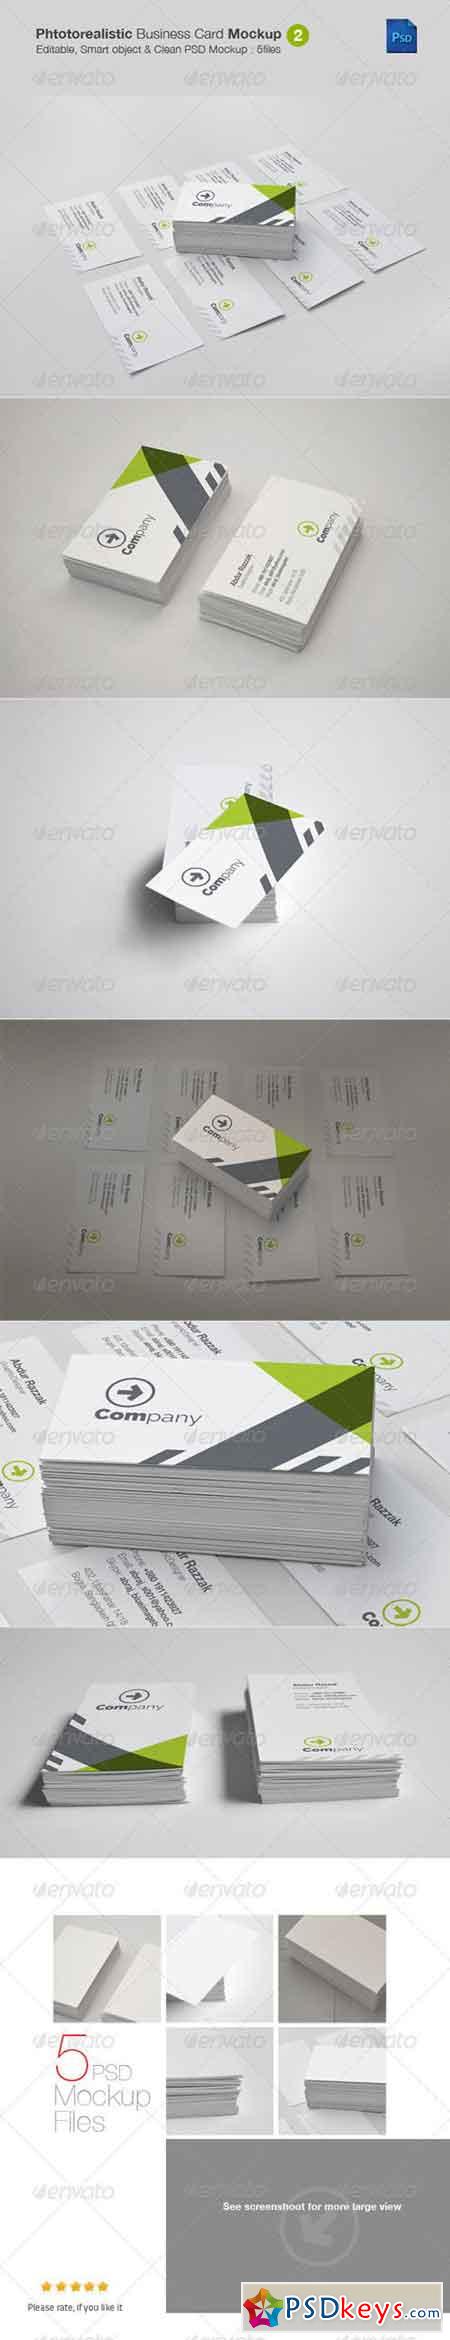 Photorealistic Business Card Mockup v2 5503121